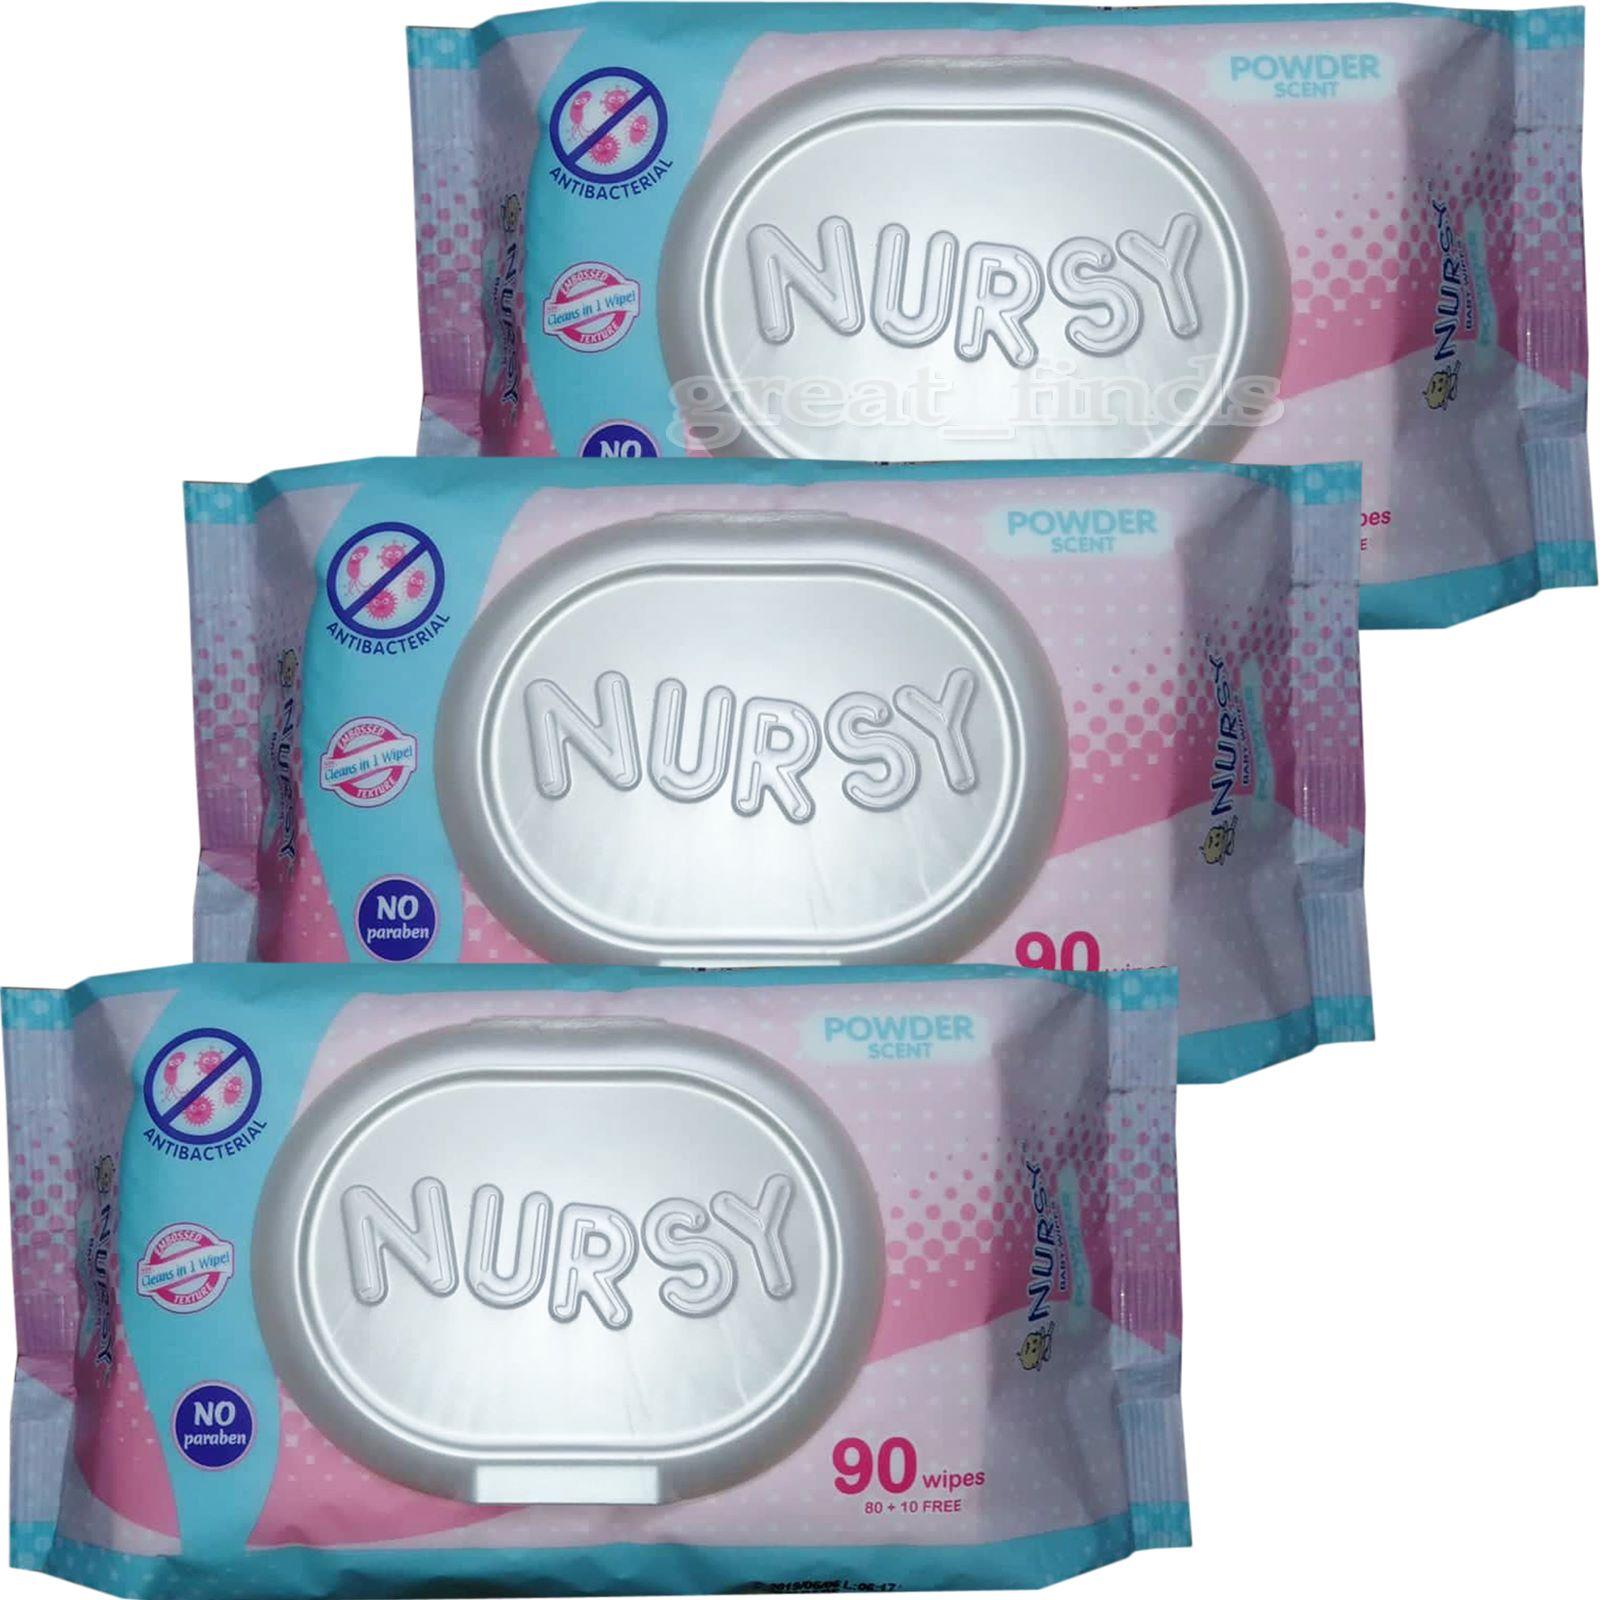 nursy wet wipes